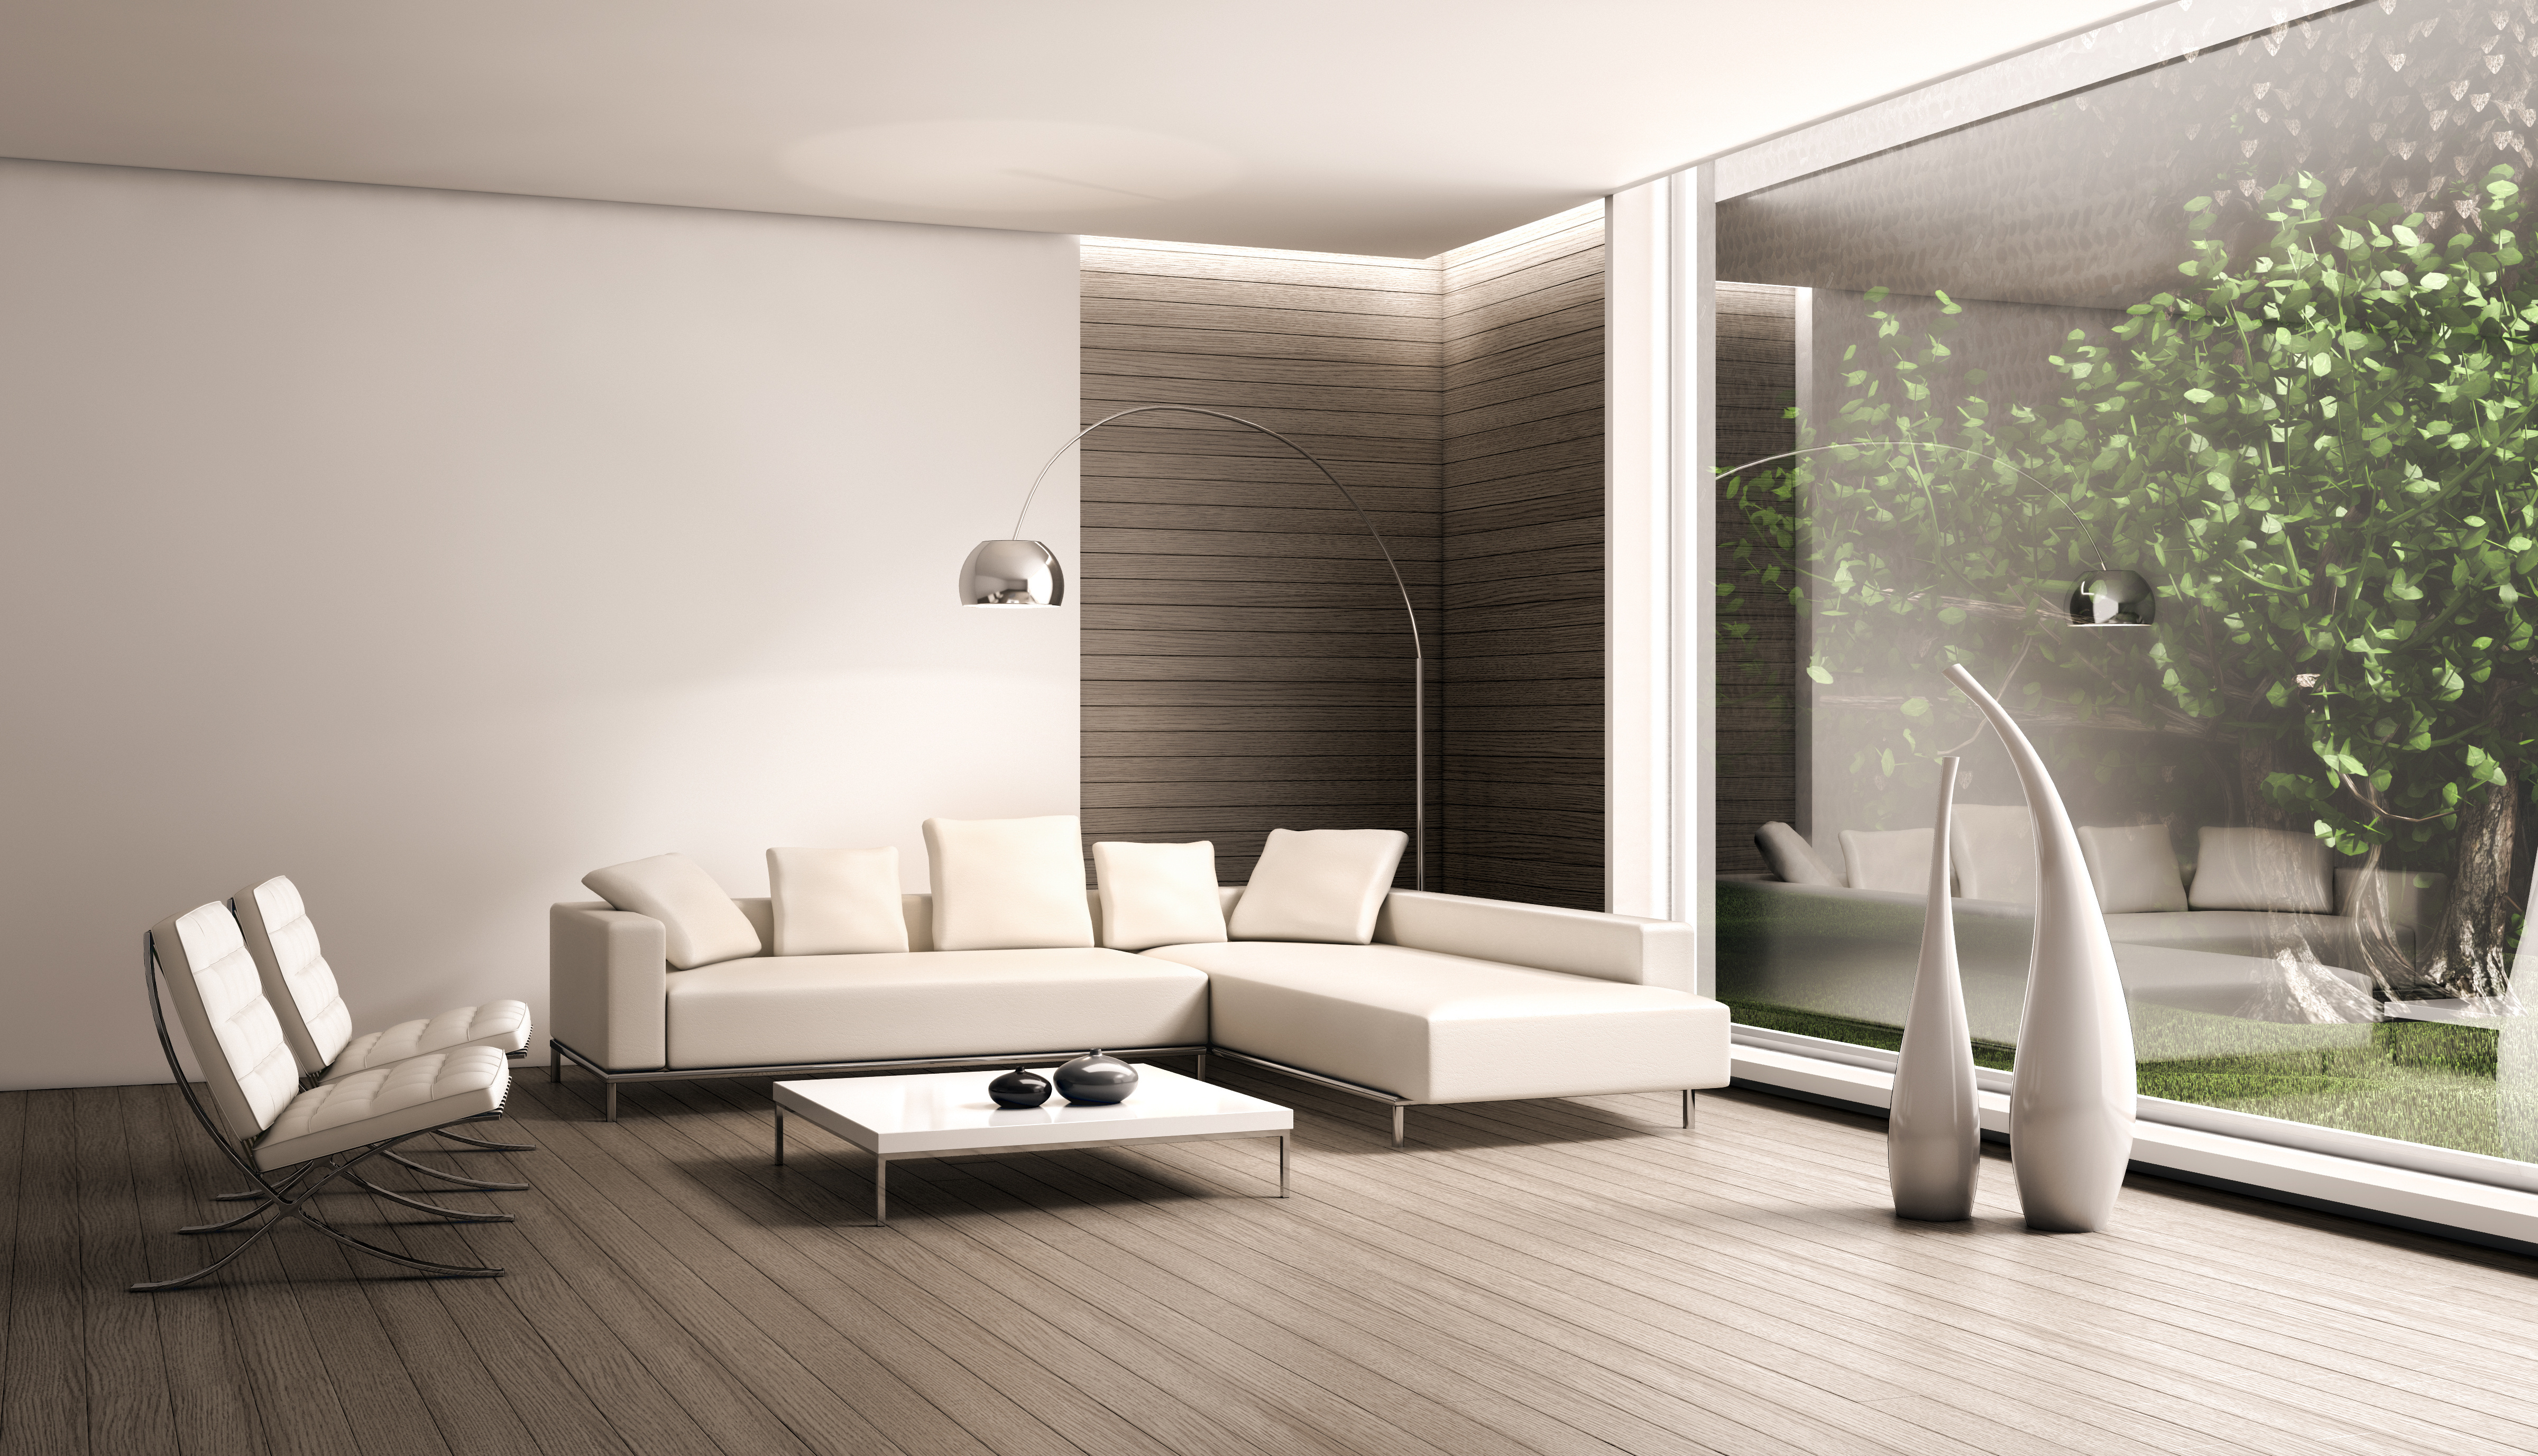 18 Outstanding Living Room Designs